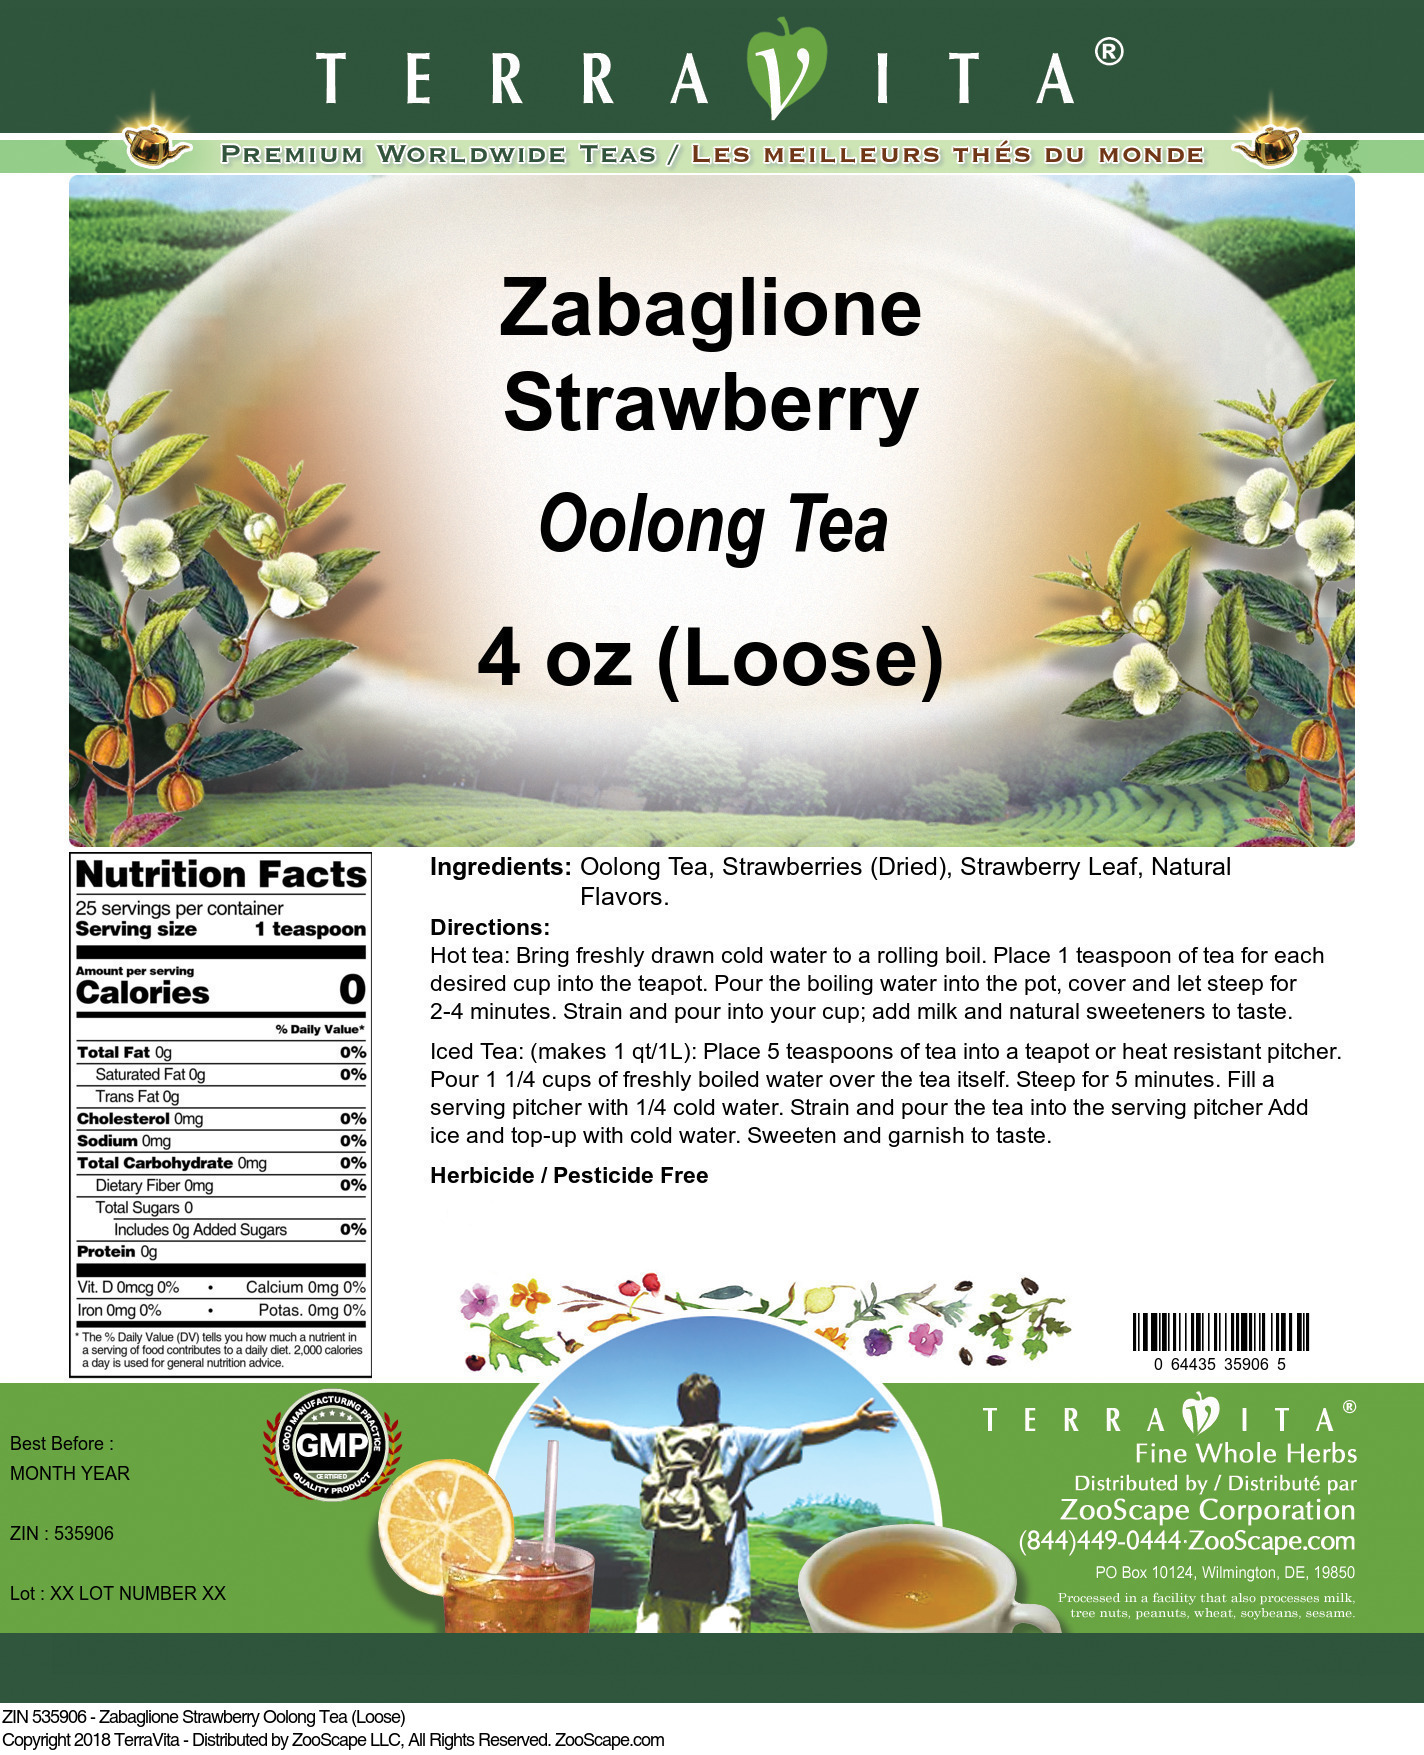 Zabaglione Strawberry Oolong Tea (Loose) - Label